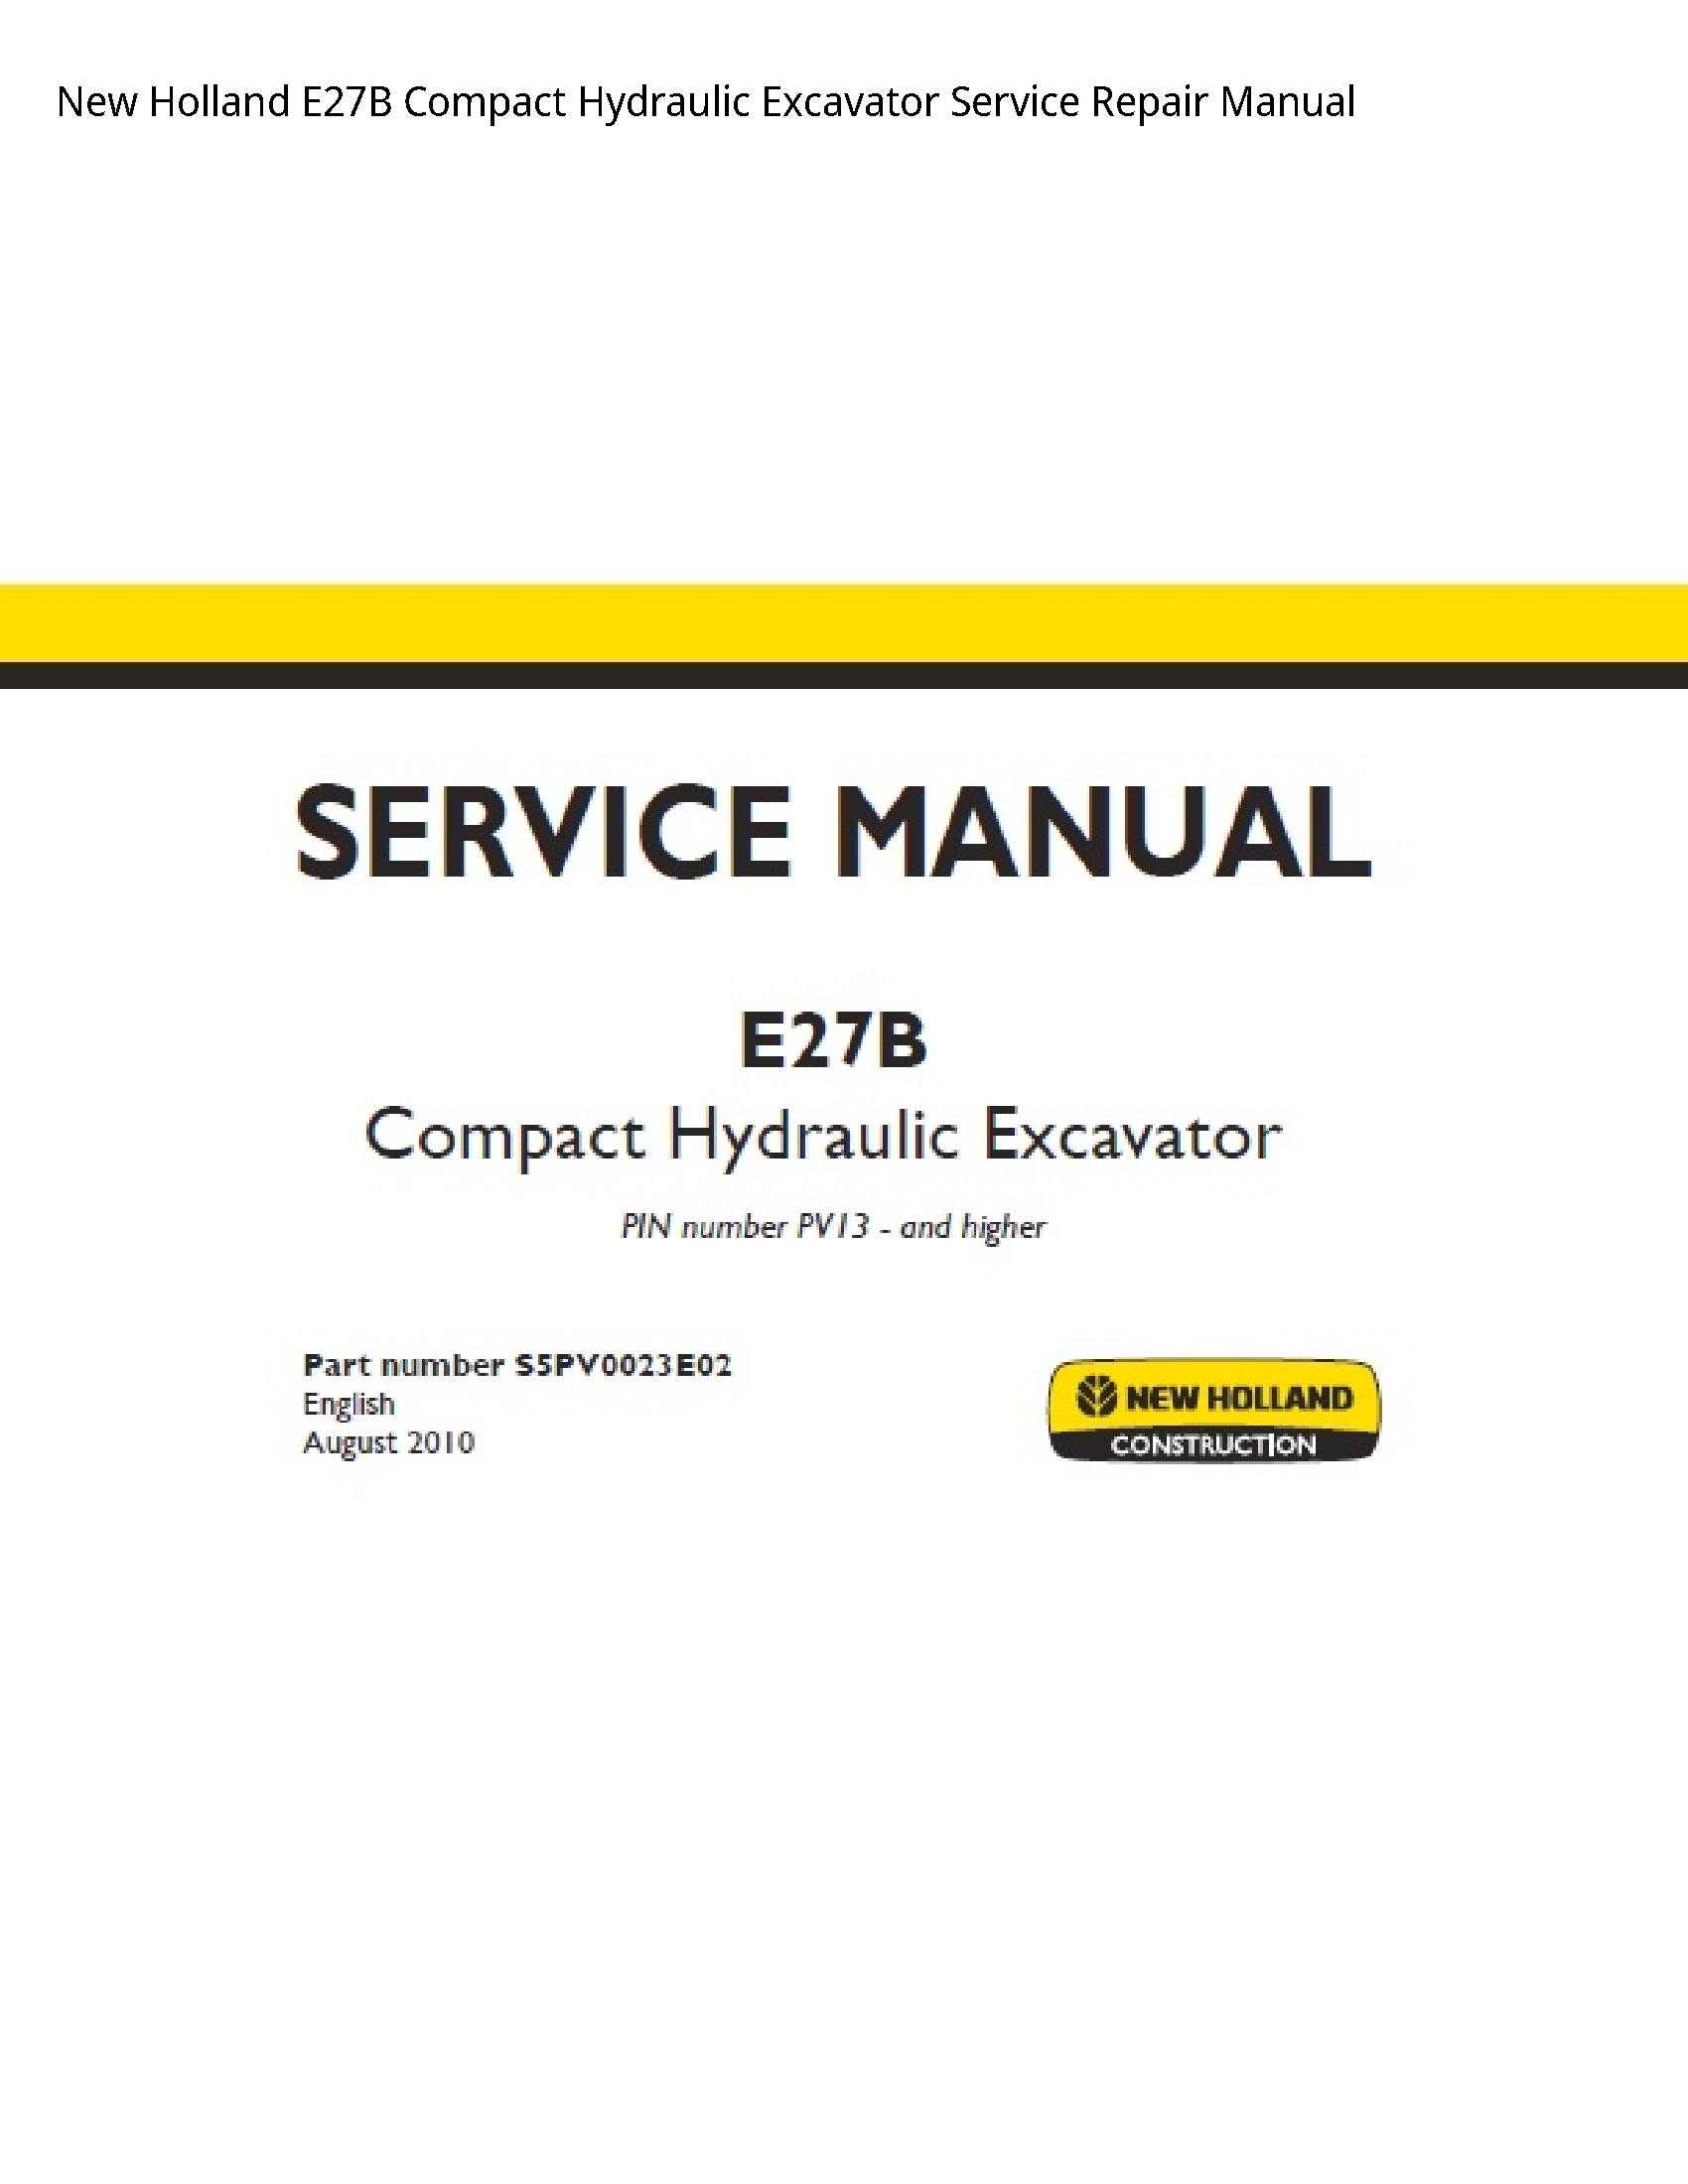 New Holland E27B Compact Hydraulic Excavator manual